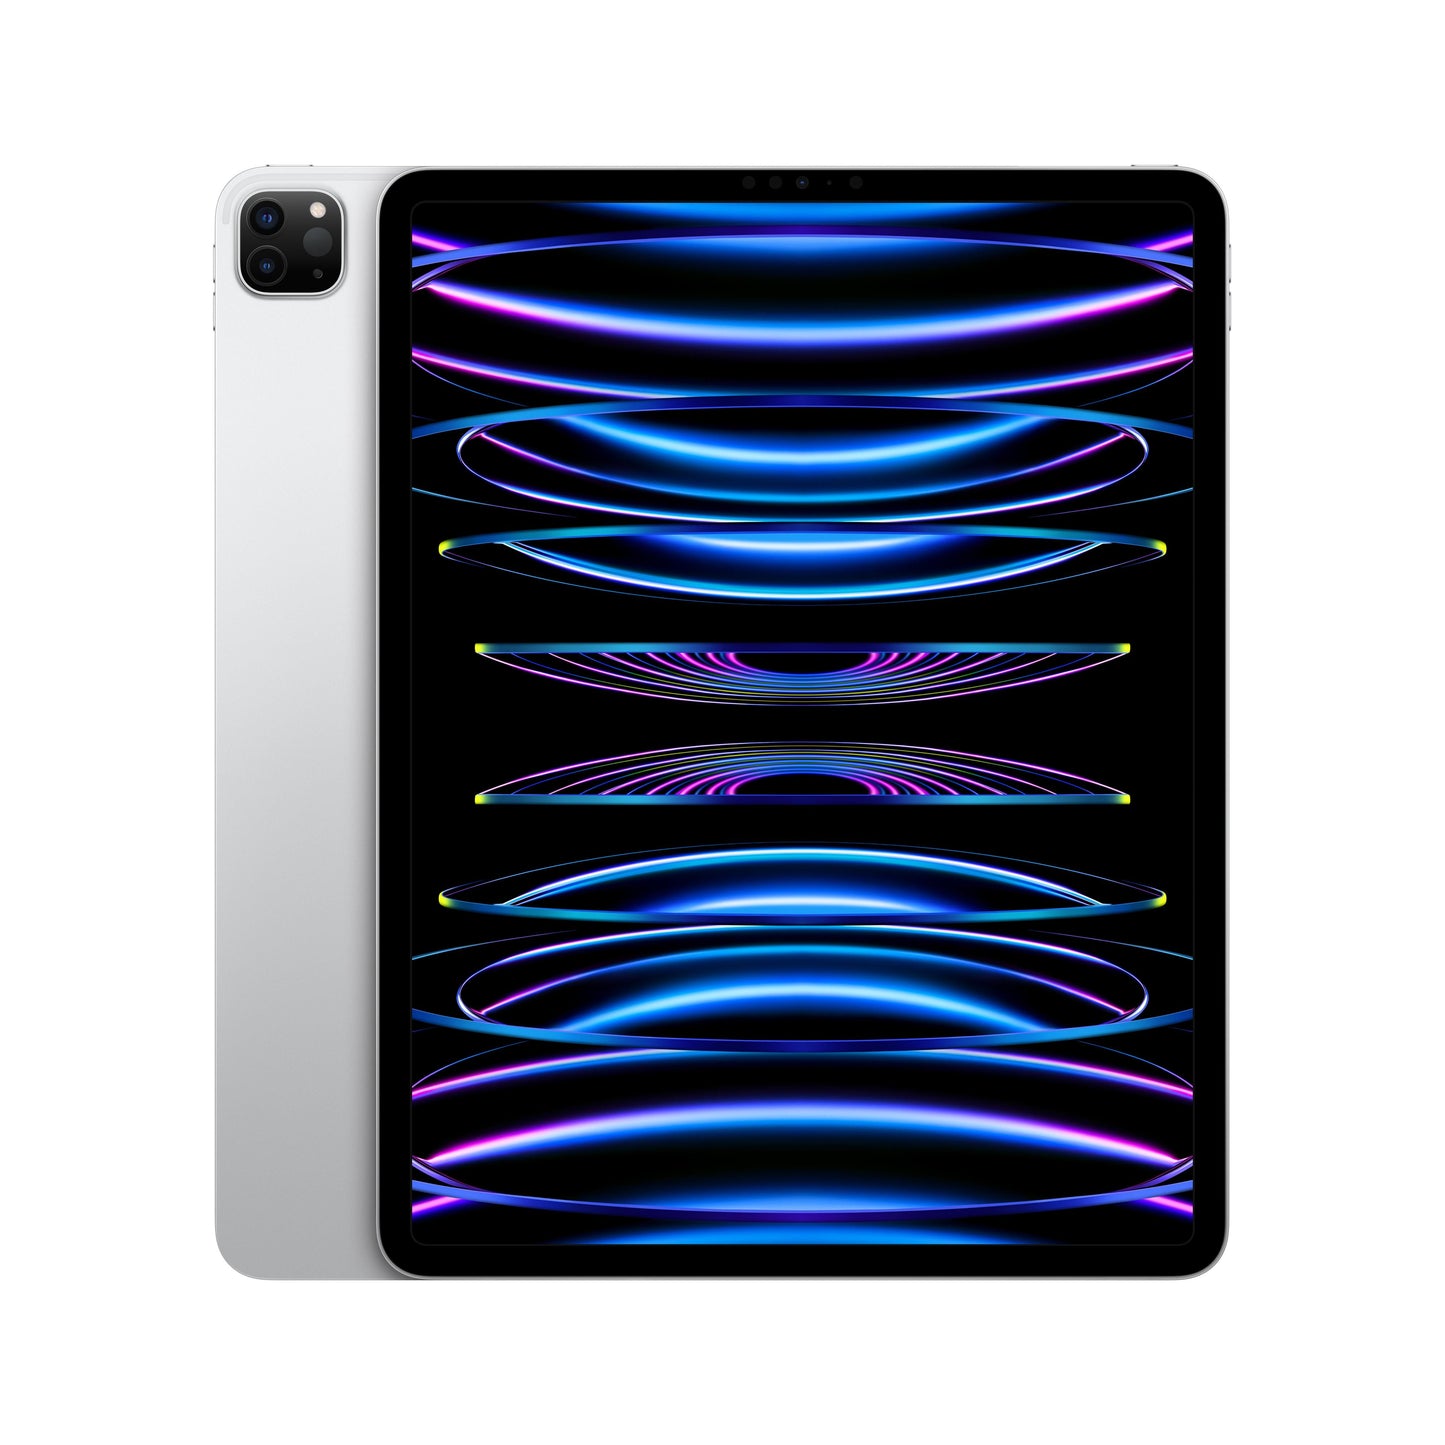 2022 12.9-inch iPad Pro Wi-Fi 256GB - Silver (6th generation)